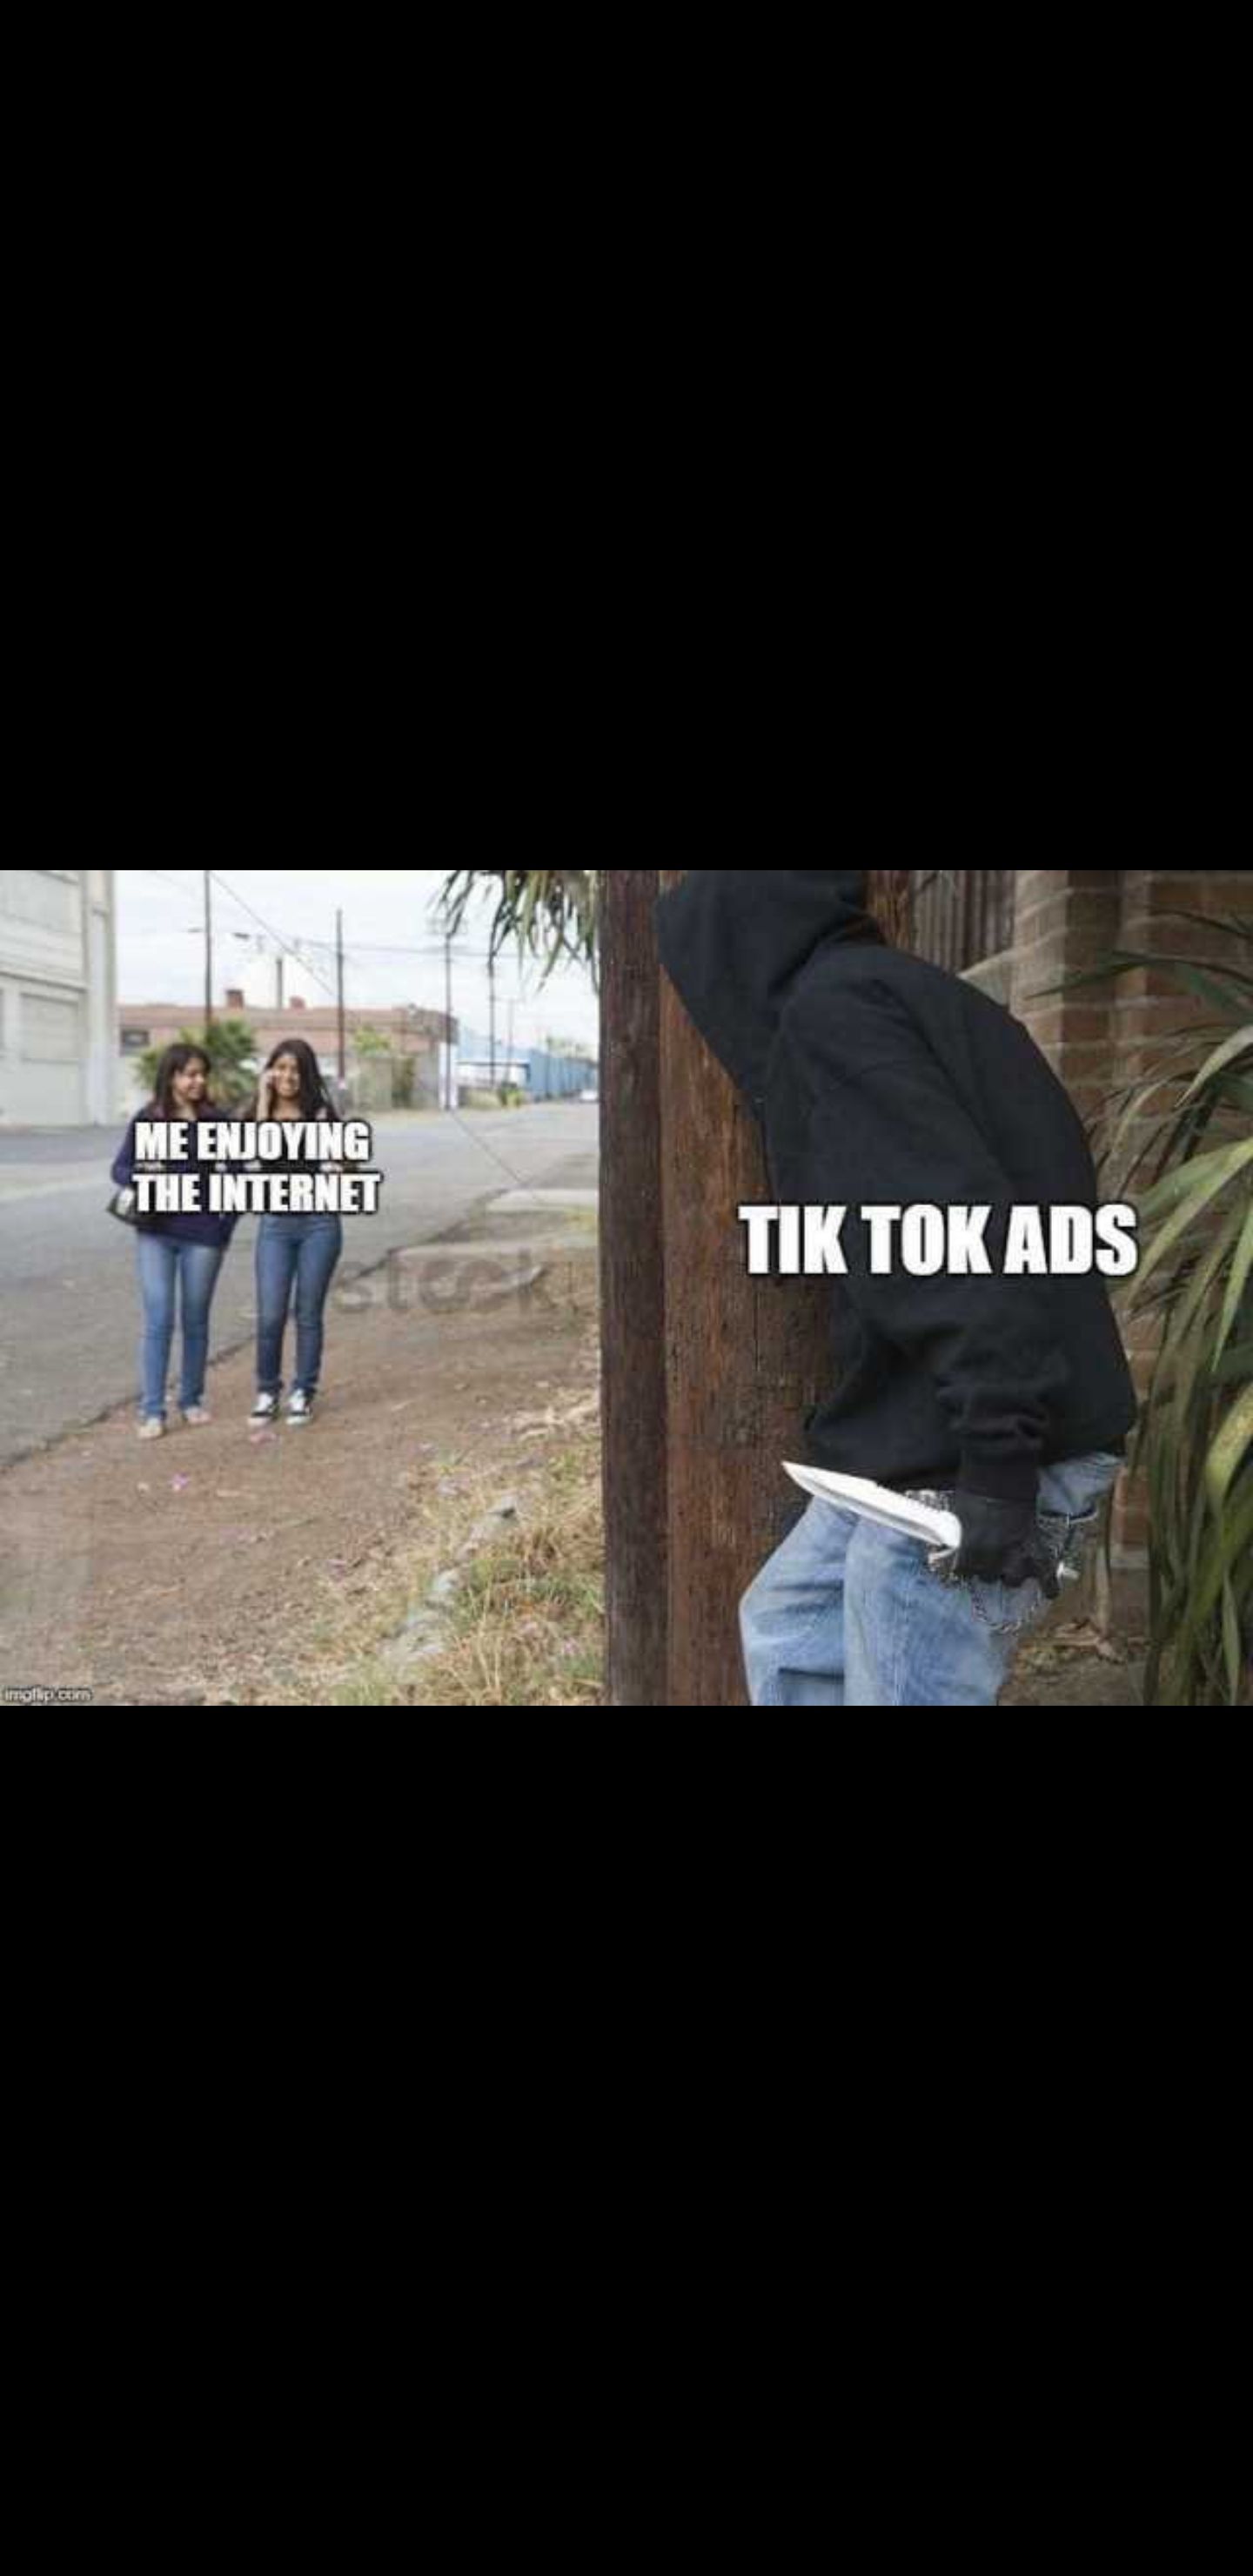 Anyone else hate Tik Tok ads??